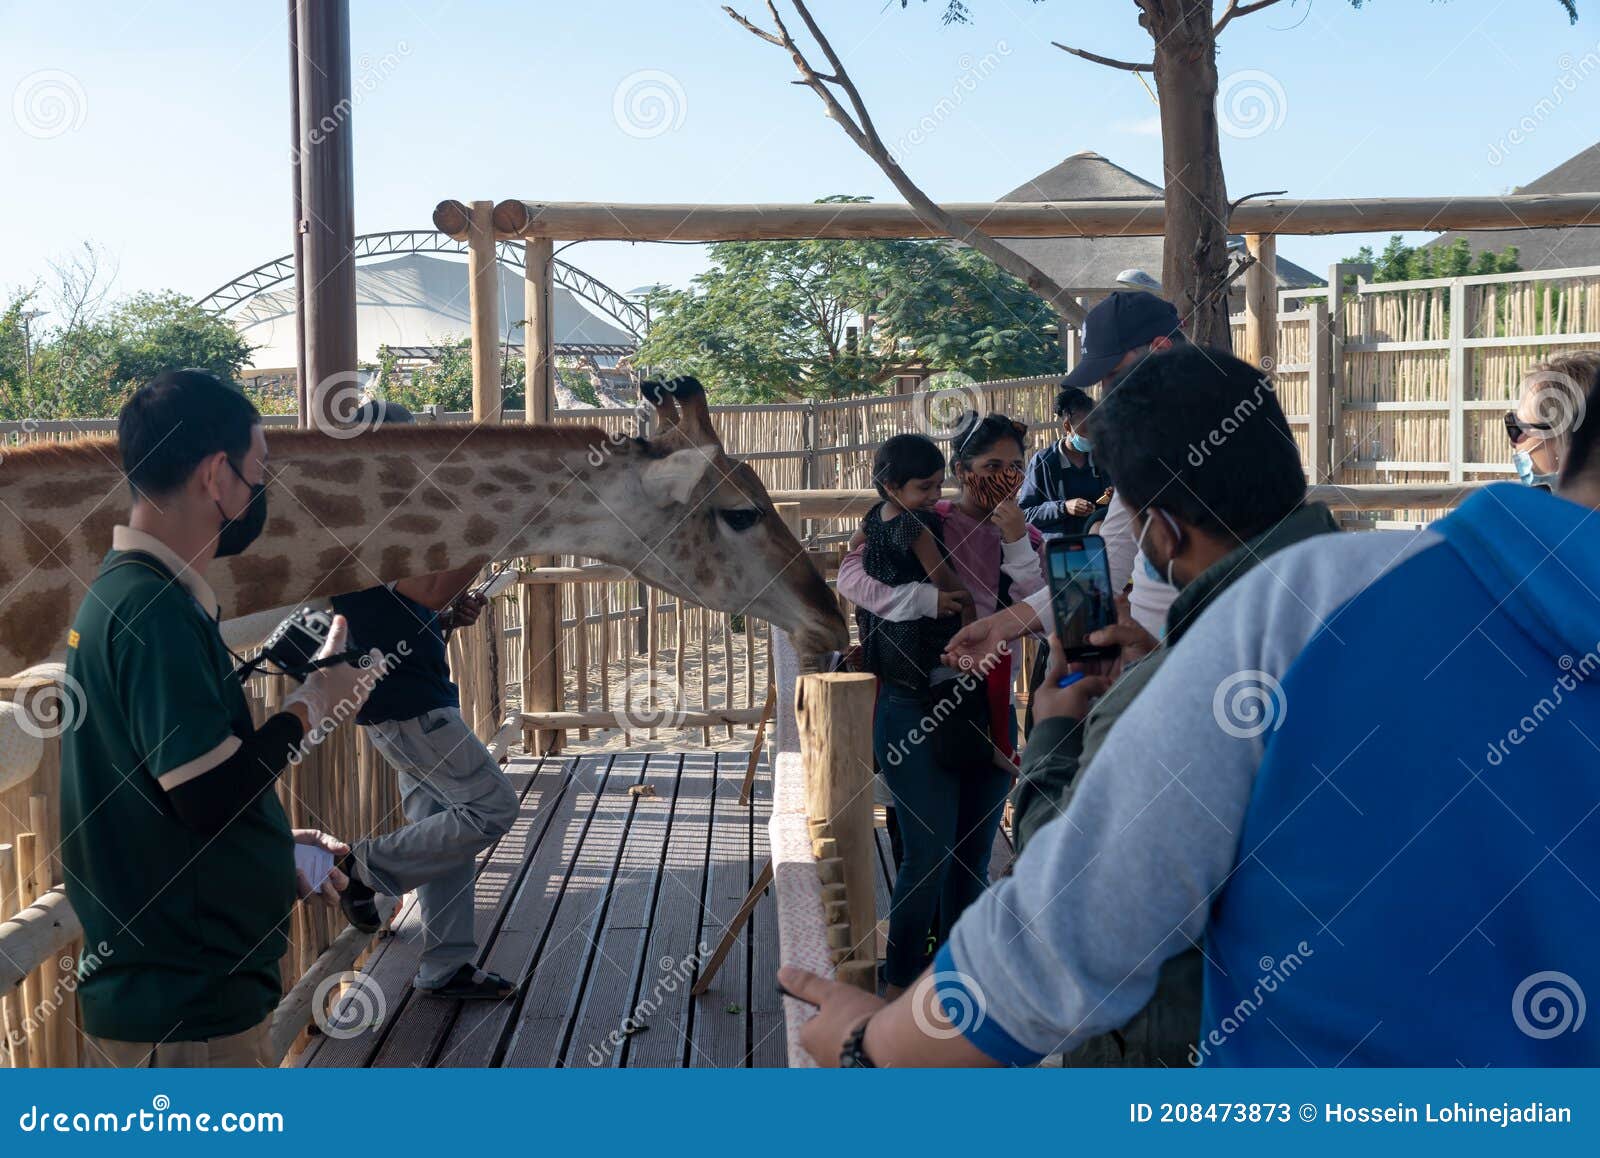 dubai safari park animal feeding